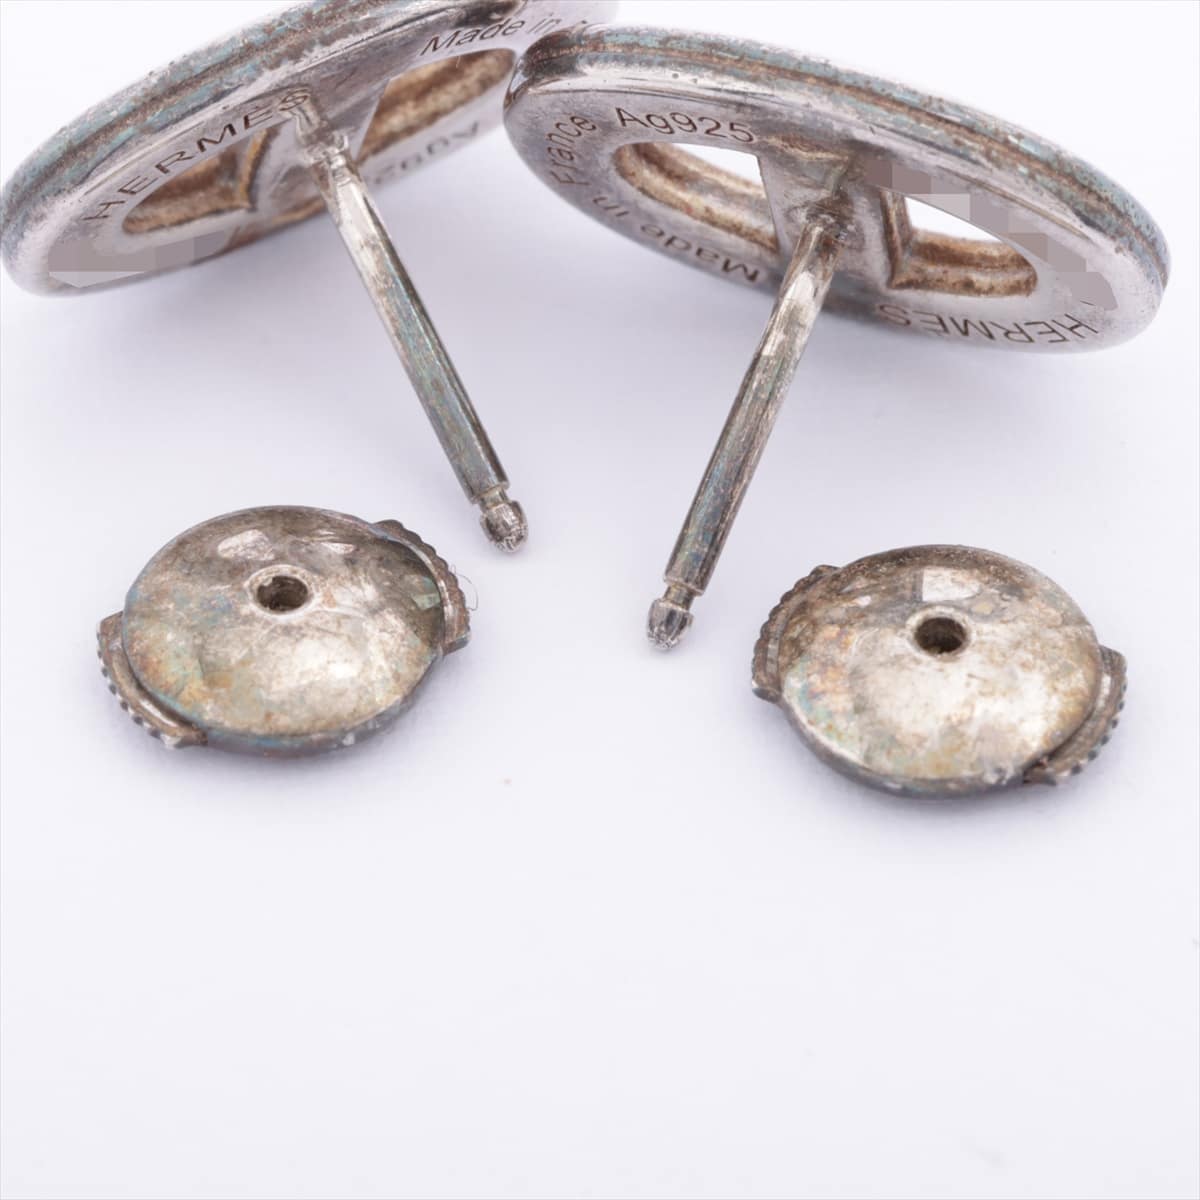 Hermès Chaîne d'Ancre Piercing jewelry (for both ears) 925 4.4g Silver